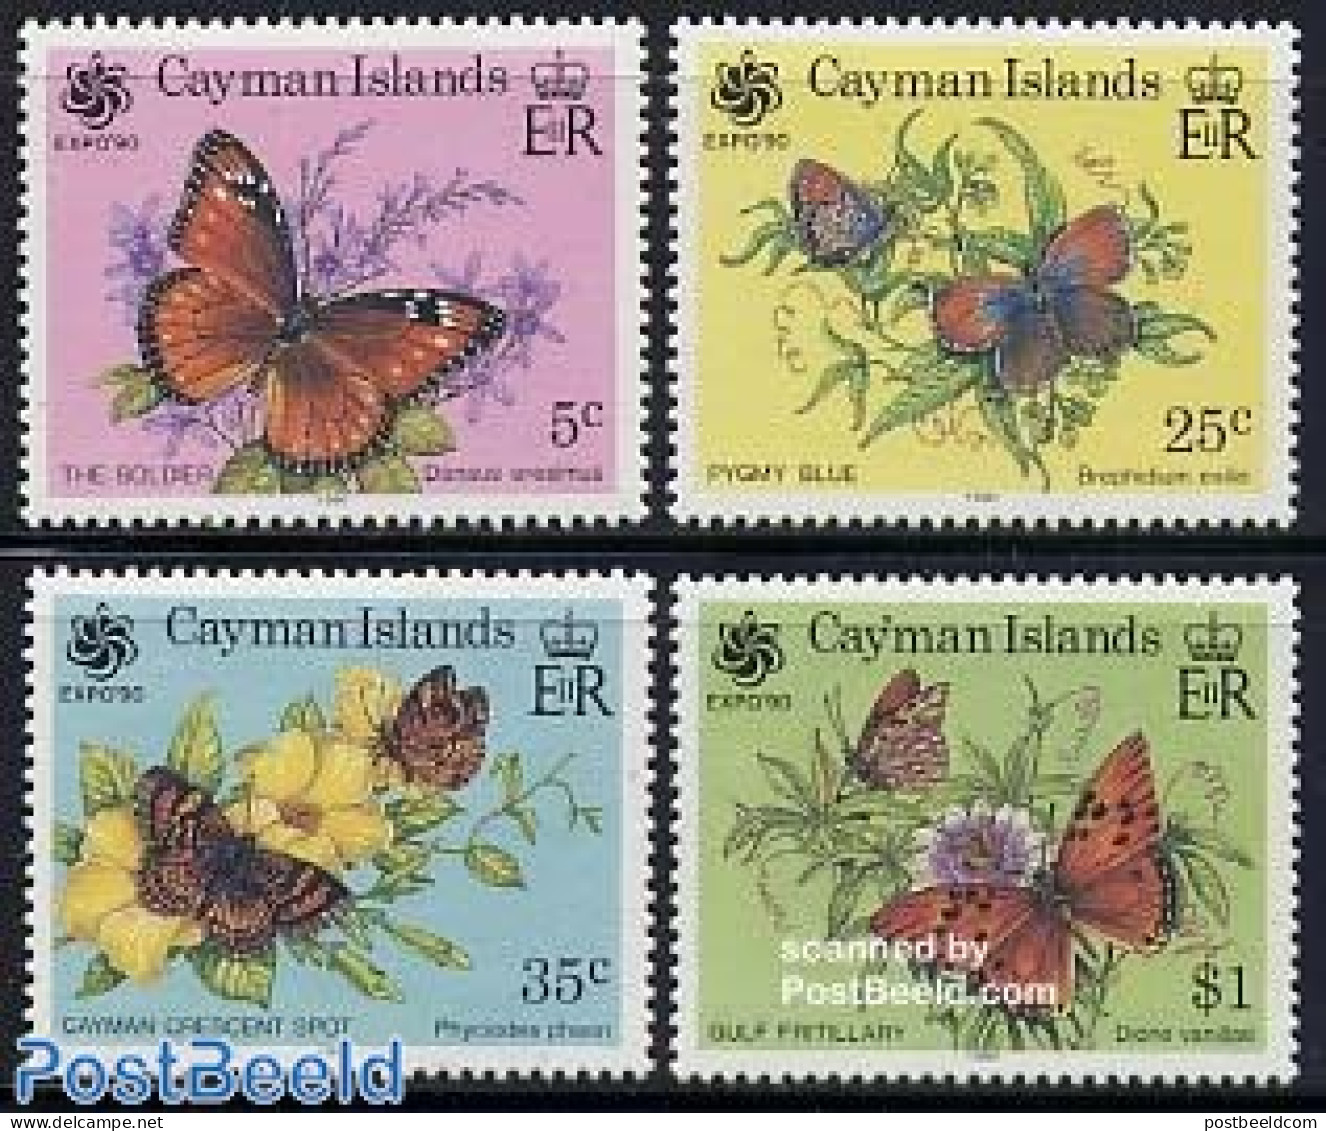 Cayman Islands 1990 Expo, Butterflies 4v, Unused (hinged), Nature - Butterflies - Cayman Islands